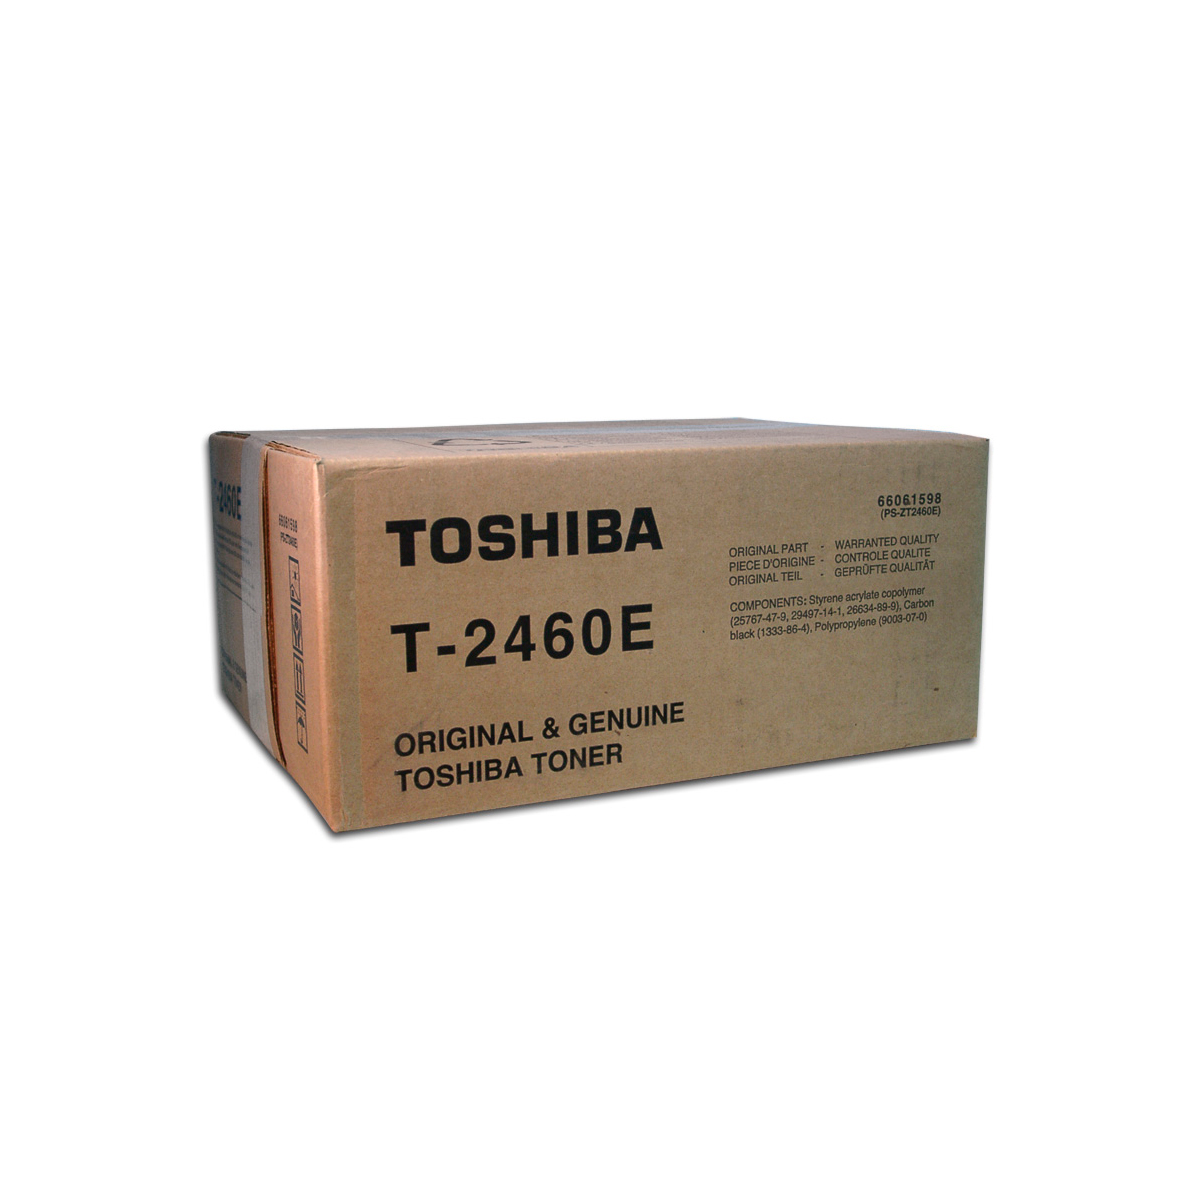 TOSHIBA TONER T2460E  66061598